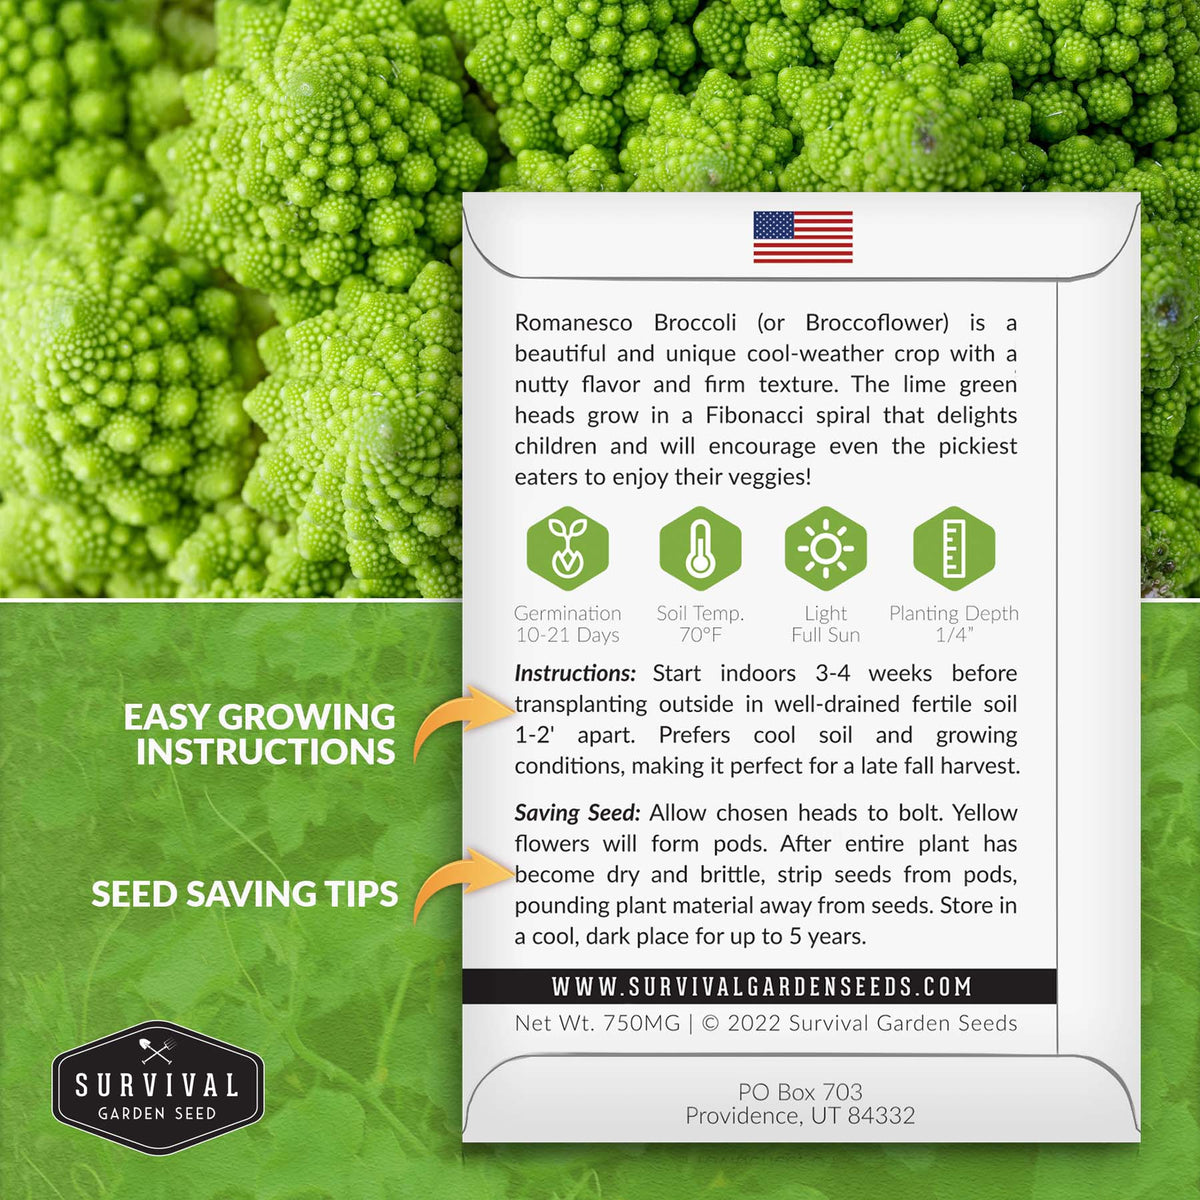 Romanesco Broccoli seed growing instructions